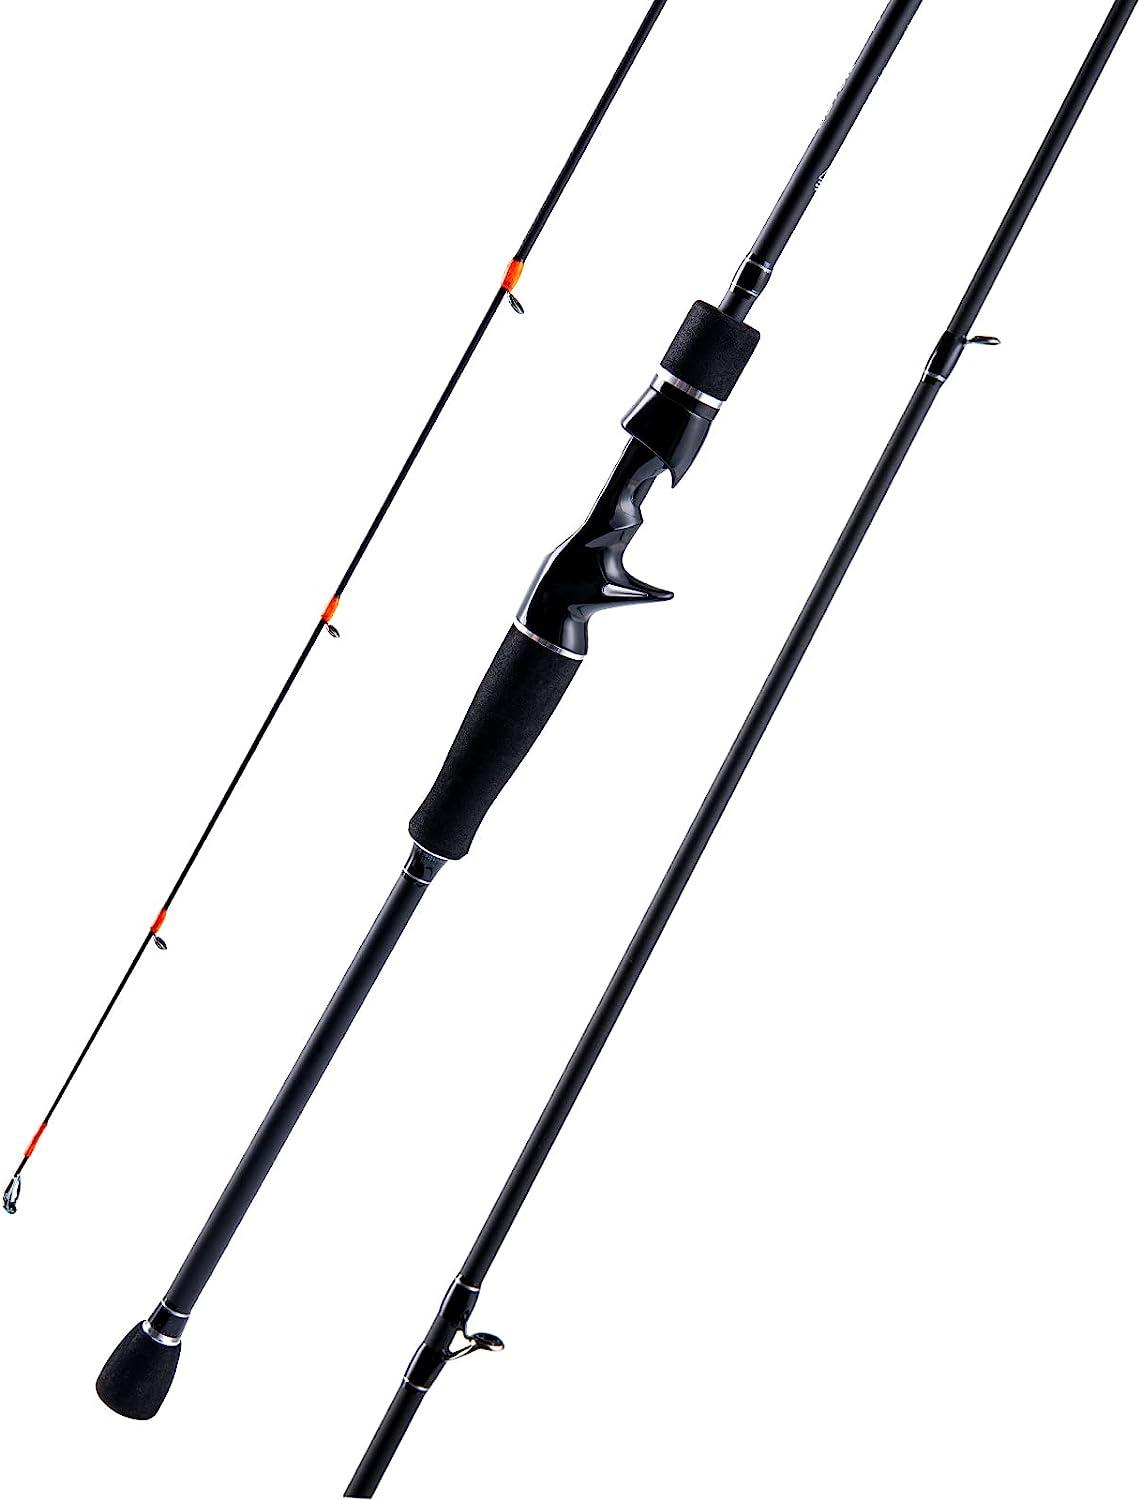 Goture Ultralight 1.68m-2.1m Spinning Casting Fishing Rod Glass